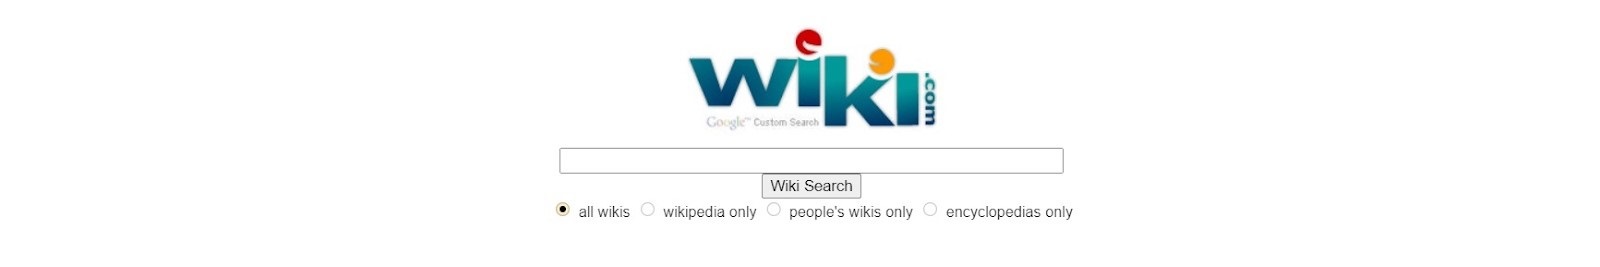 Wiki.com - альтернатива Яндексу и Гуглу